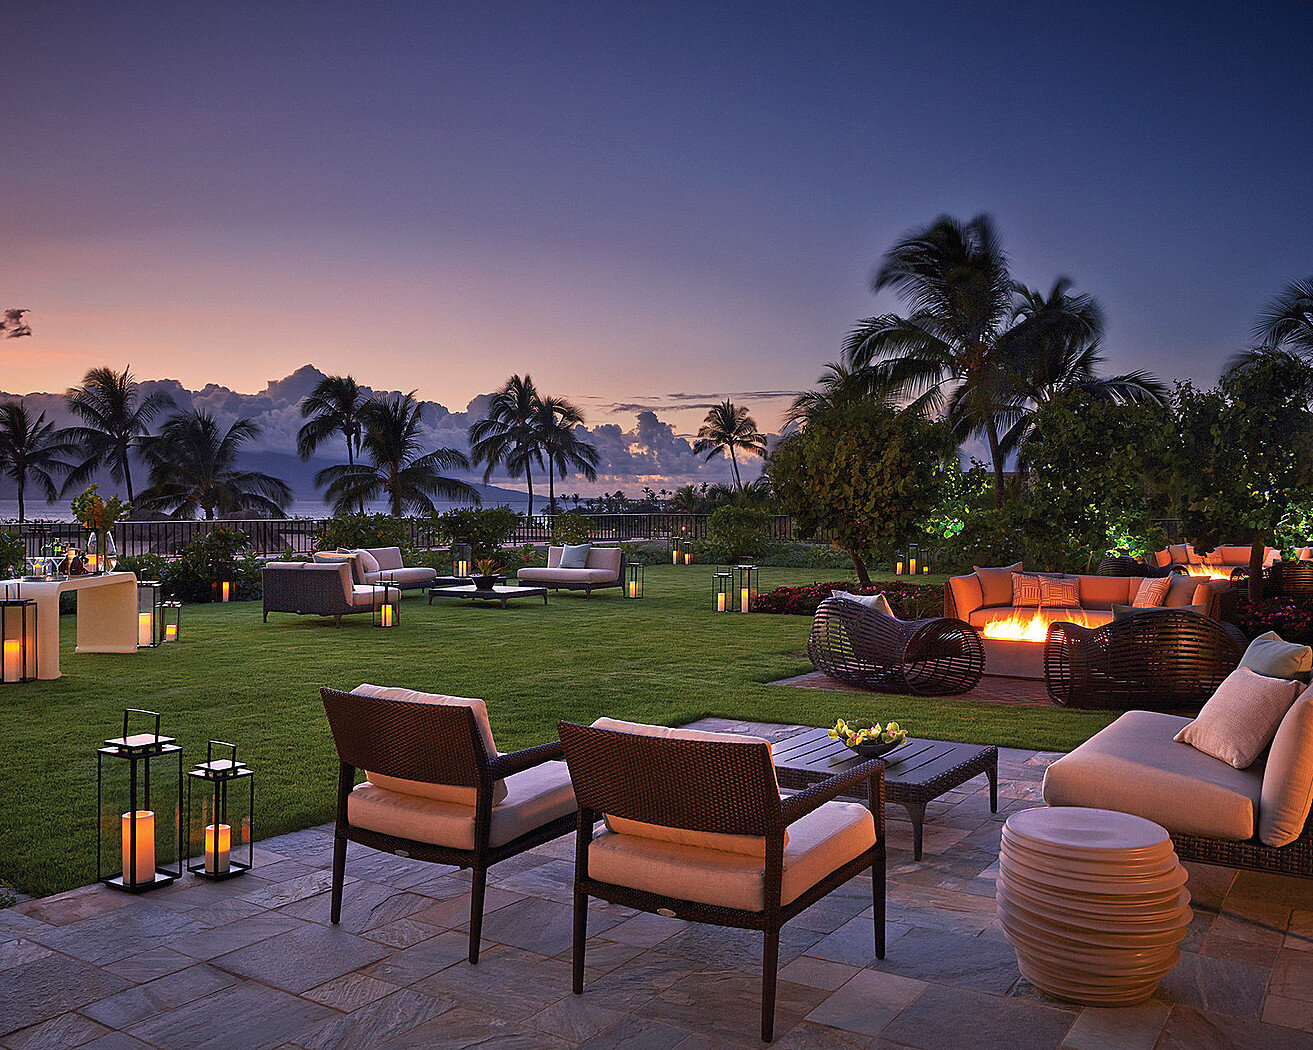   Relaxing at dusk at Four Seasons Resort Maui at Wailea (photo credit: Four Seasons)  